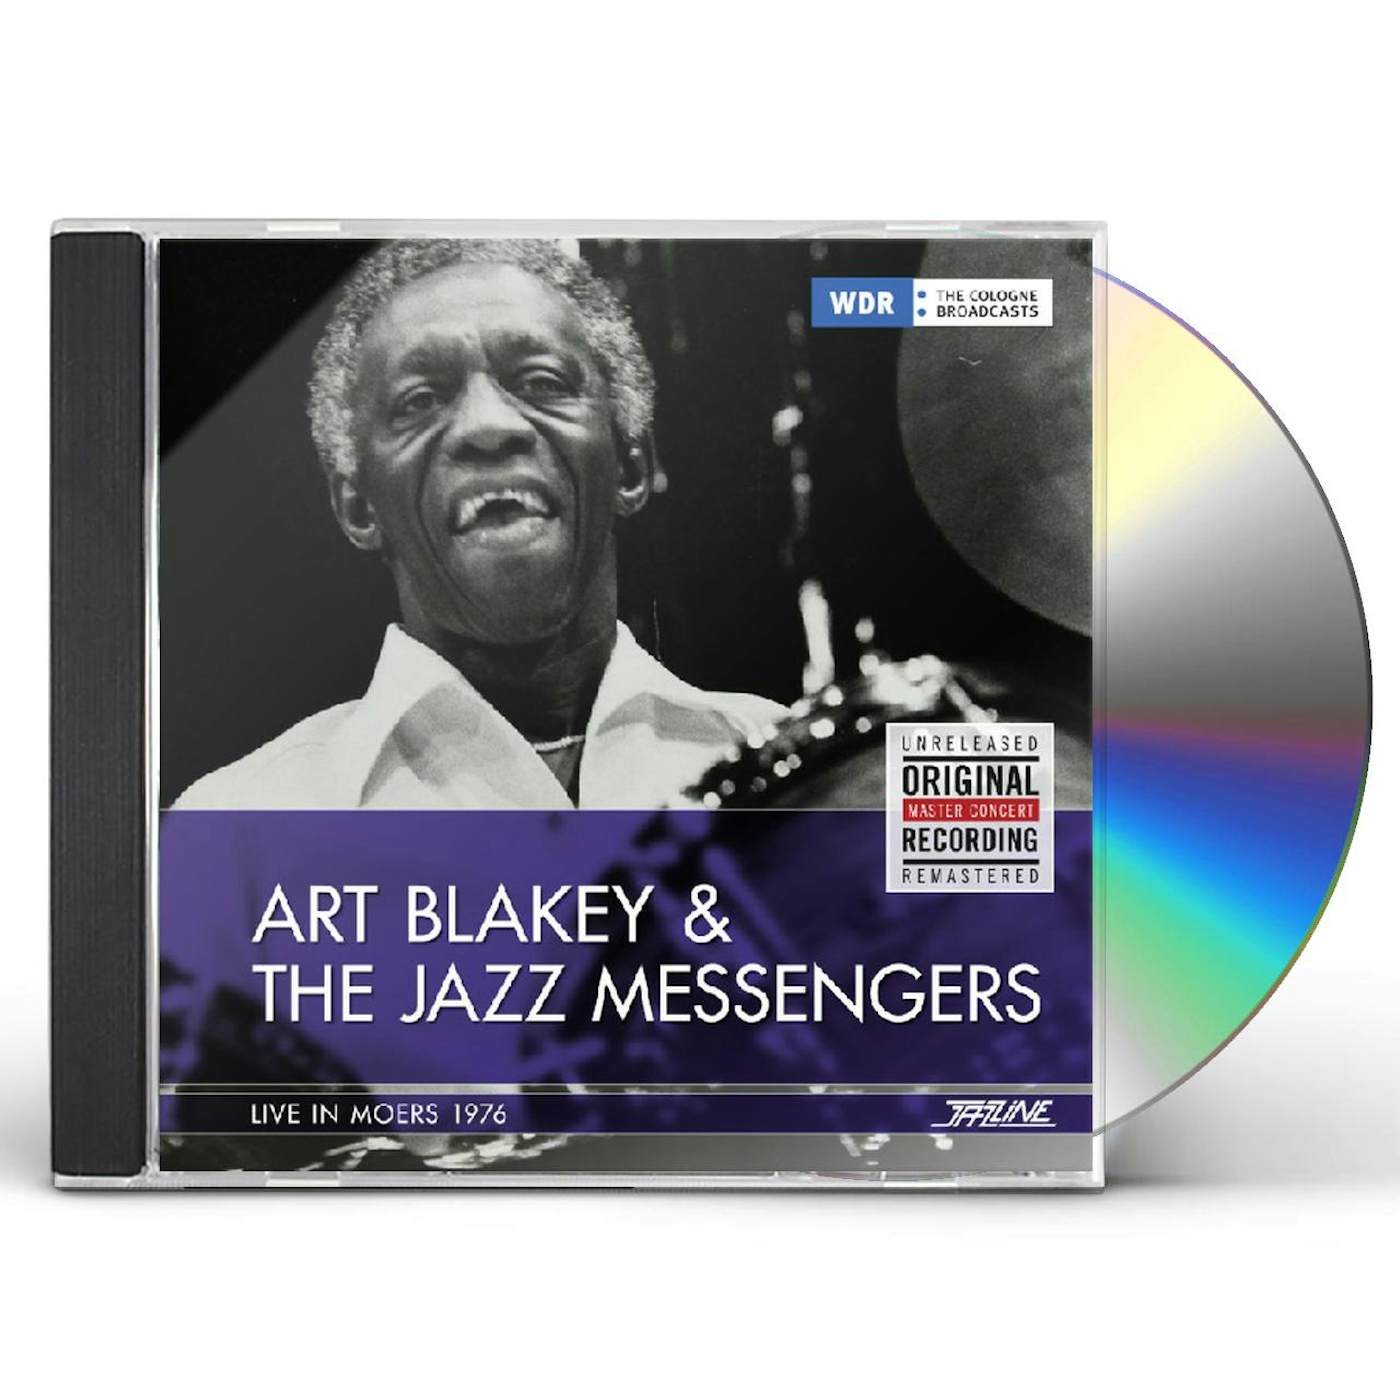 Art Blakey & The Jazz Messengers LIVE IN MOERS 1976 CD